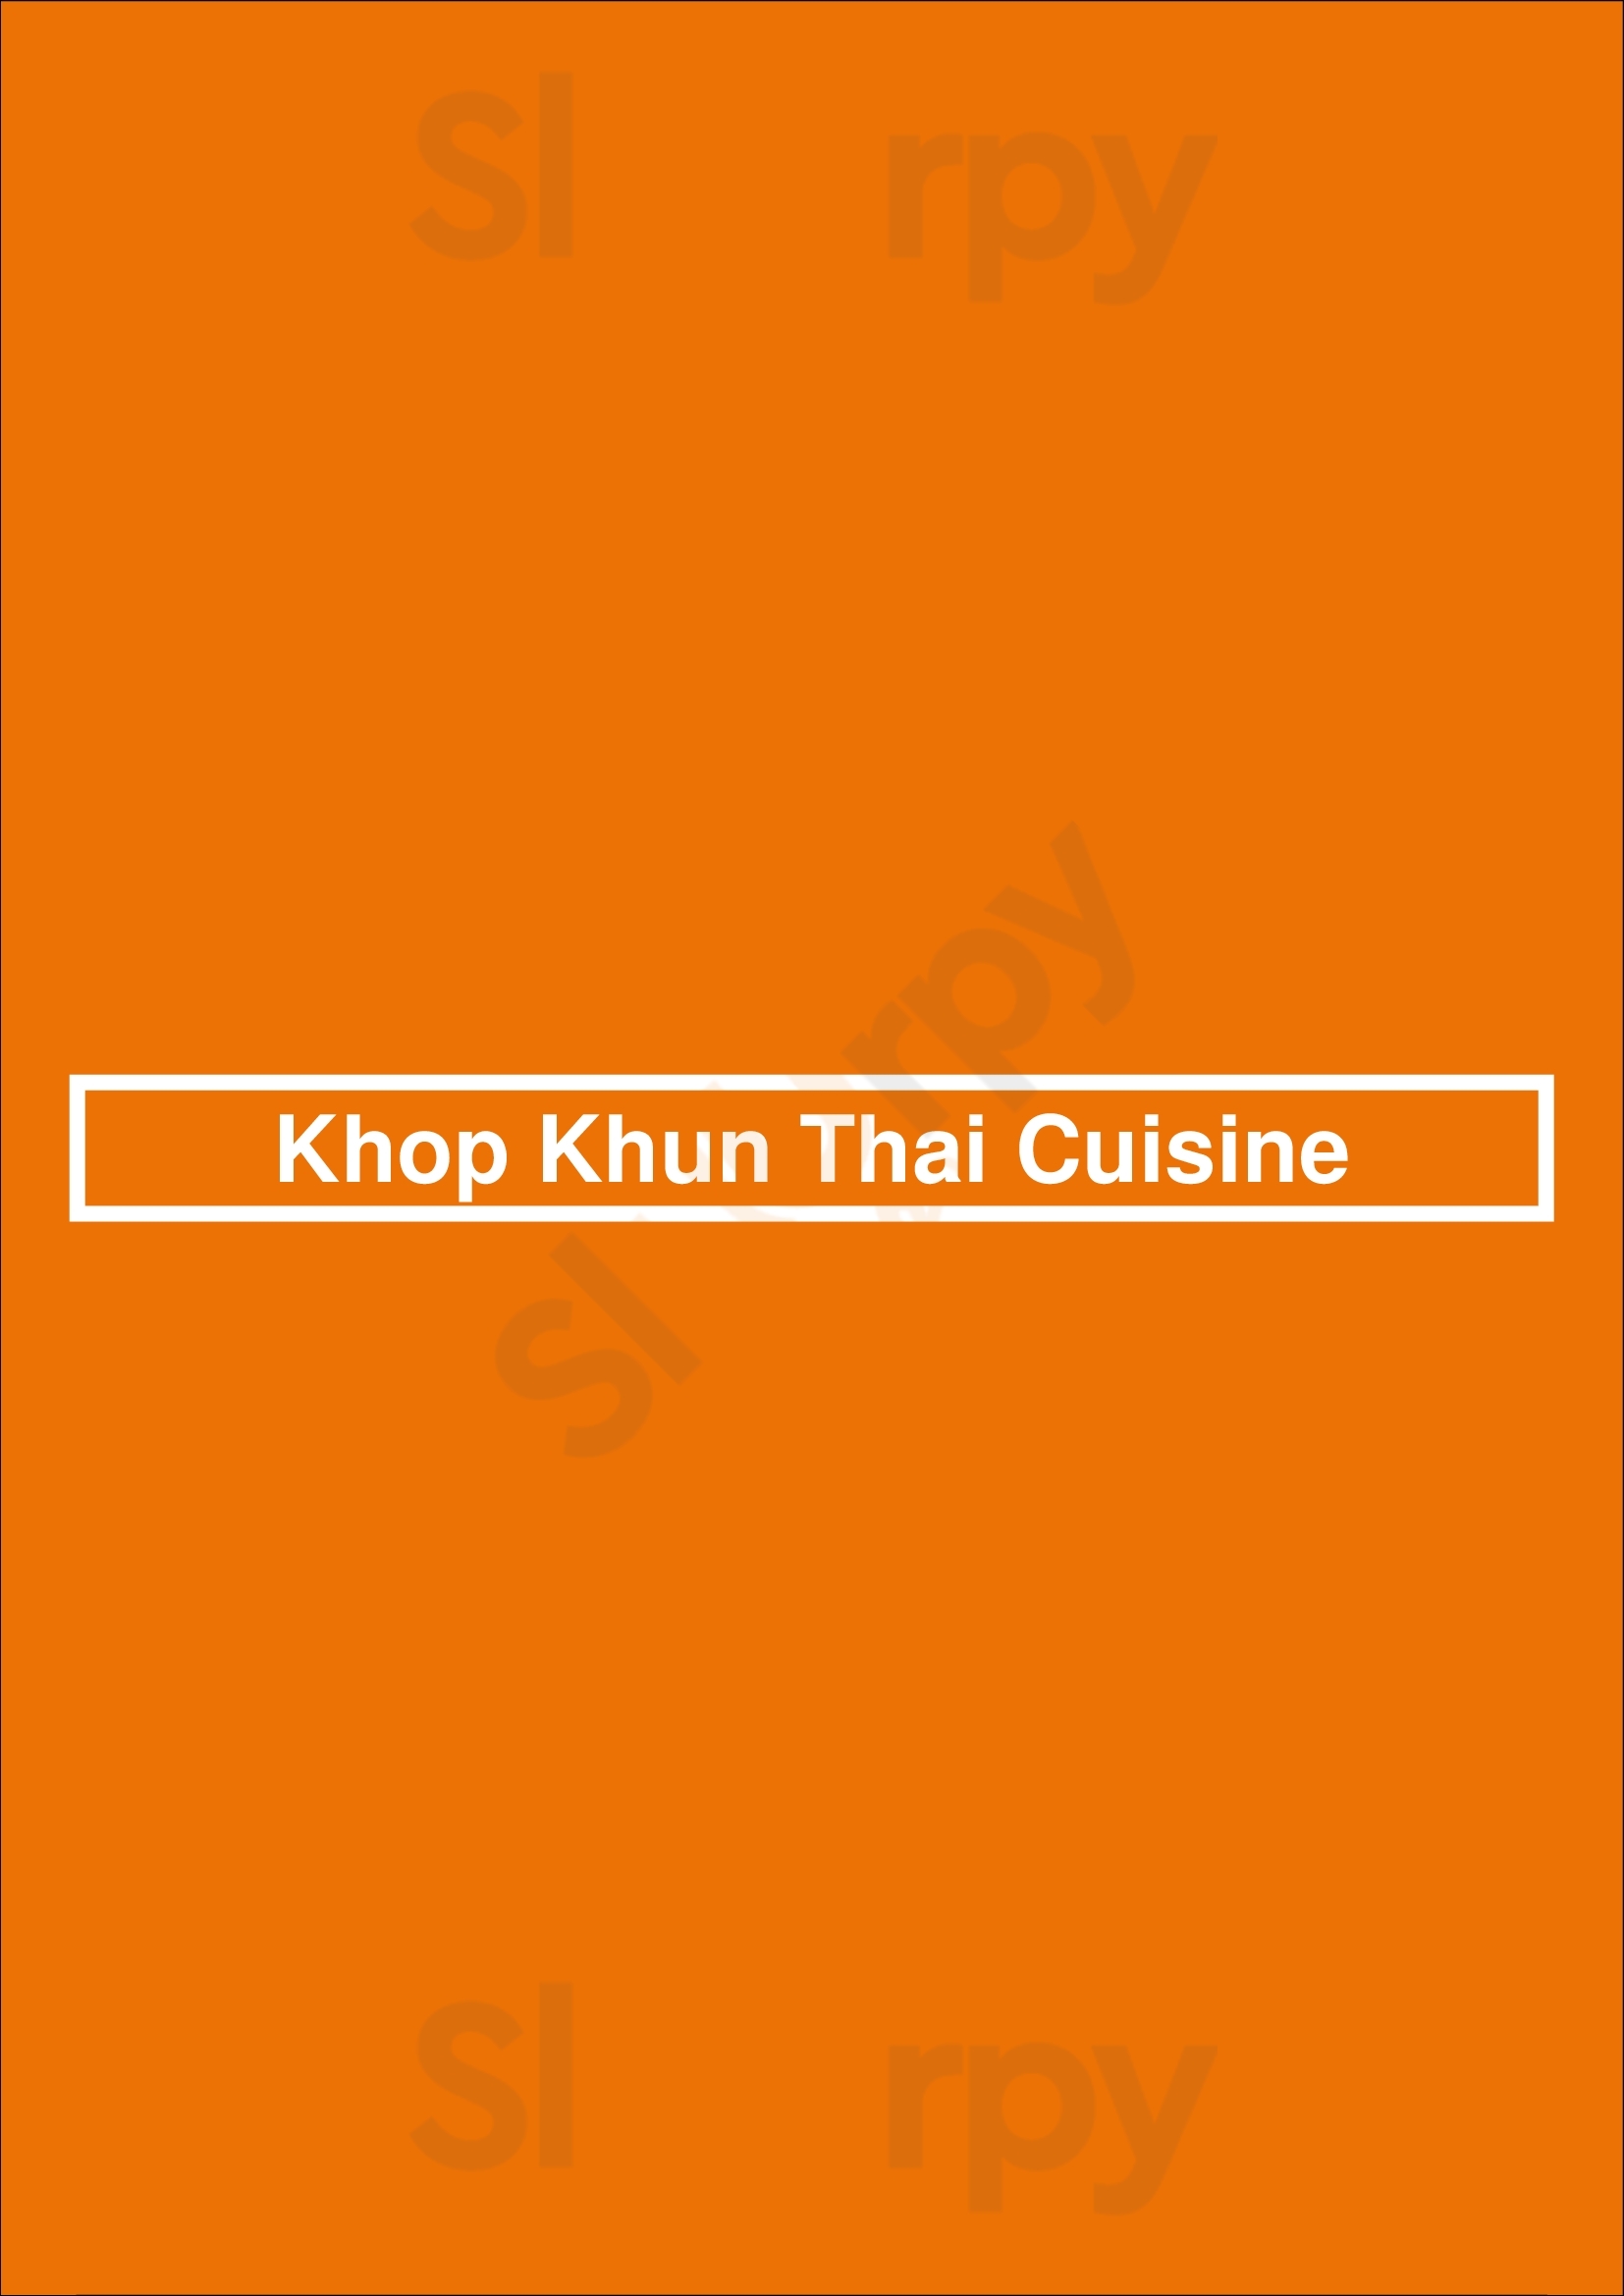 Khop Khun Thai Cuisine Alphen aan den Rijn Menu - 1